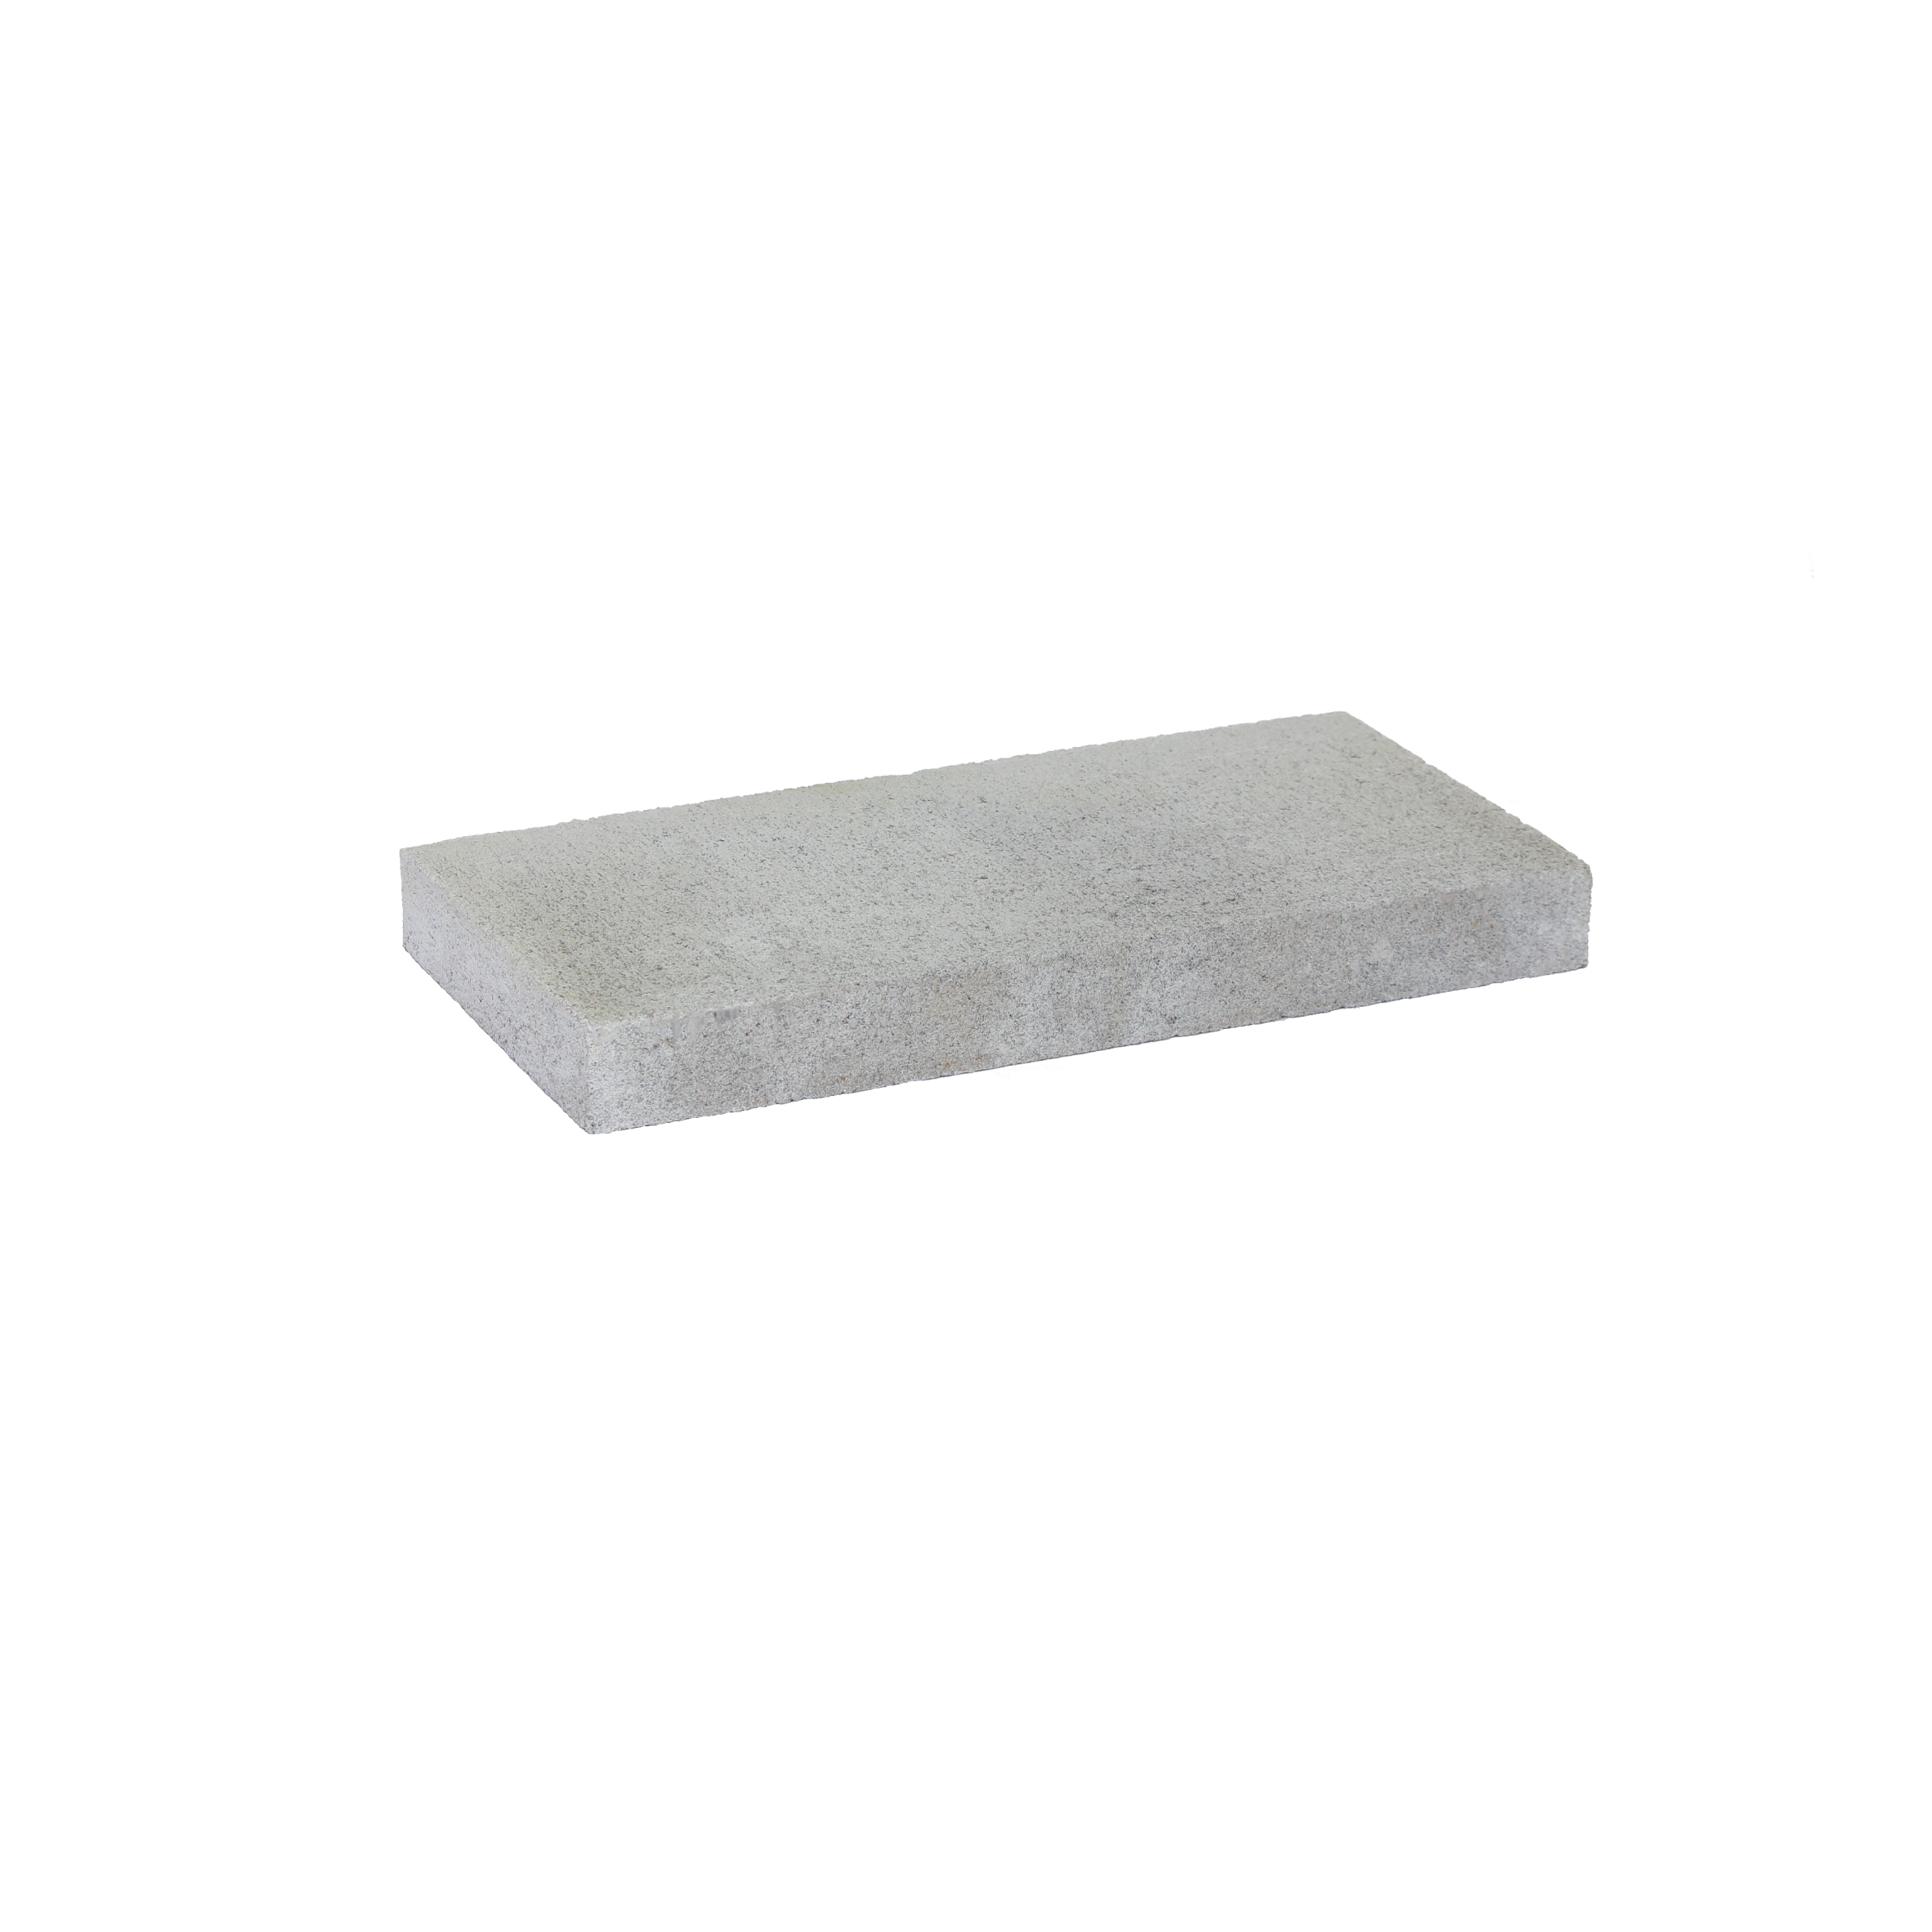 Apex Capping Tile Concrete 50.31C – Smart Stone Blocks & Pavers Buy Online